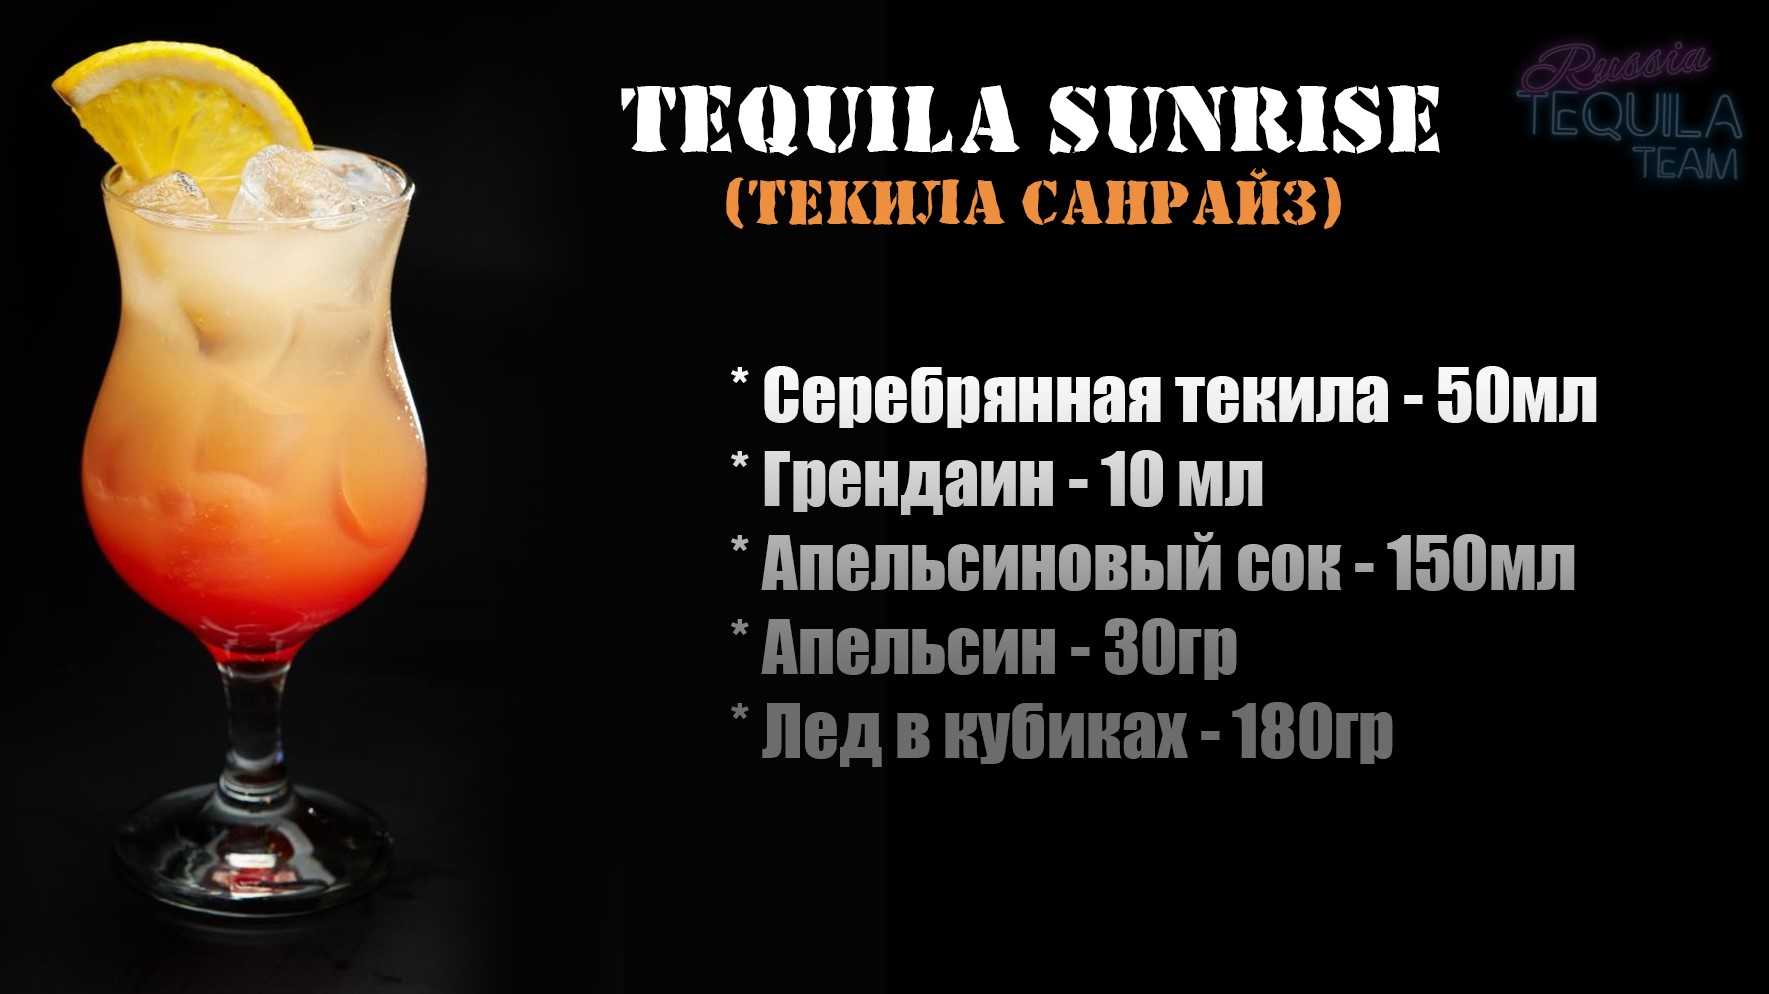 Коктейль текила санрайз (tequila sunrise): рецепт